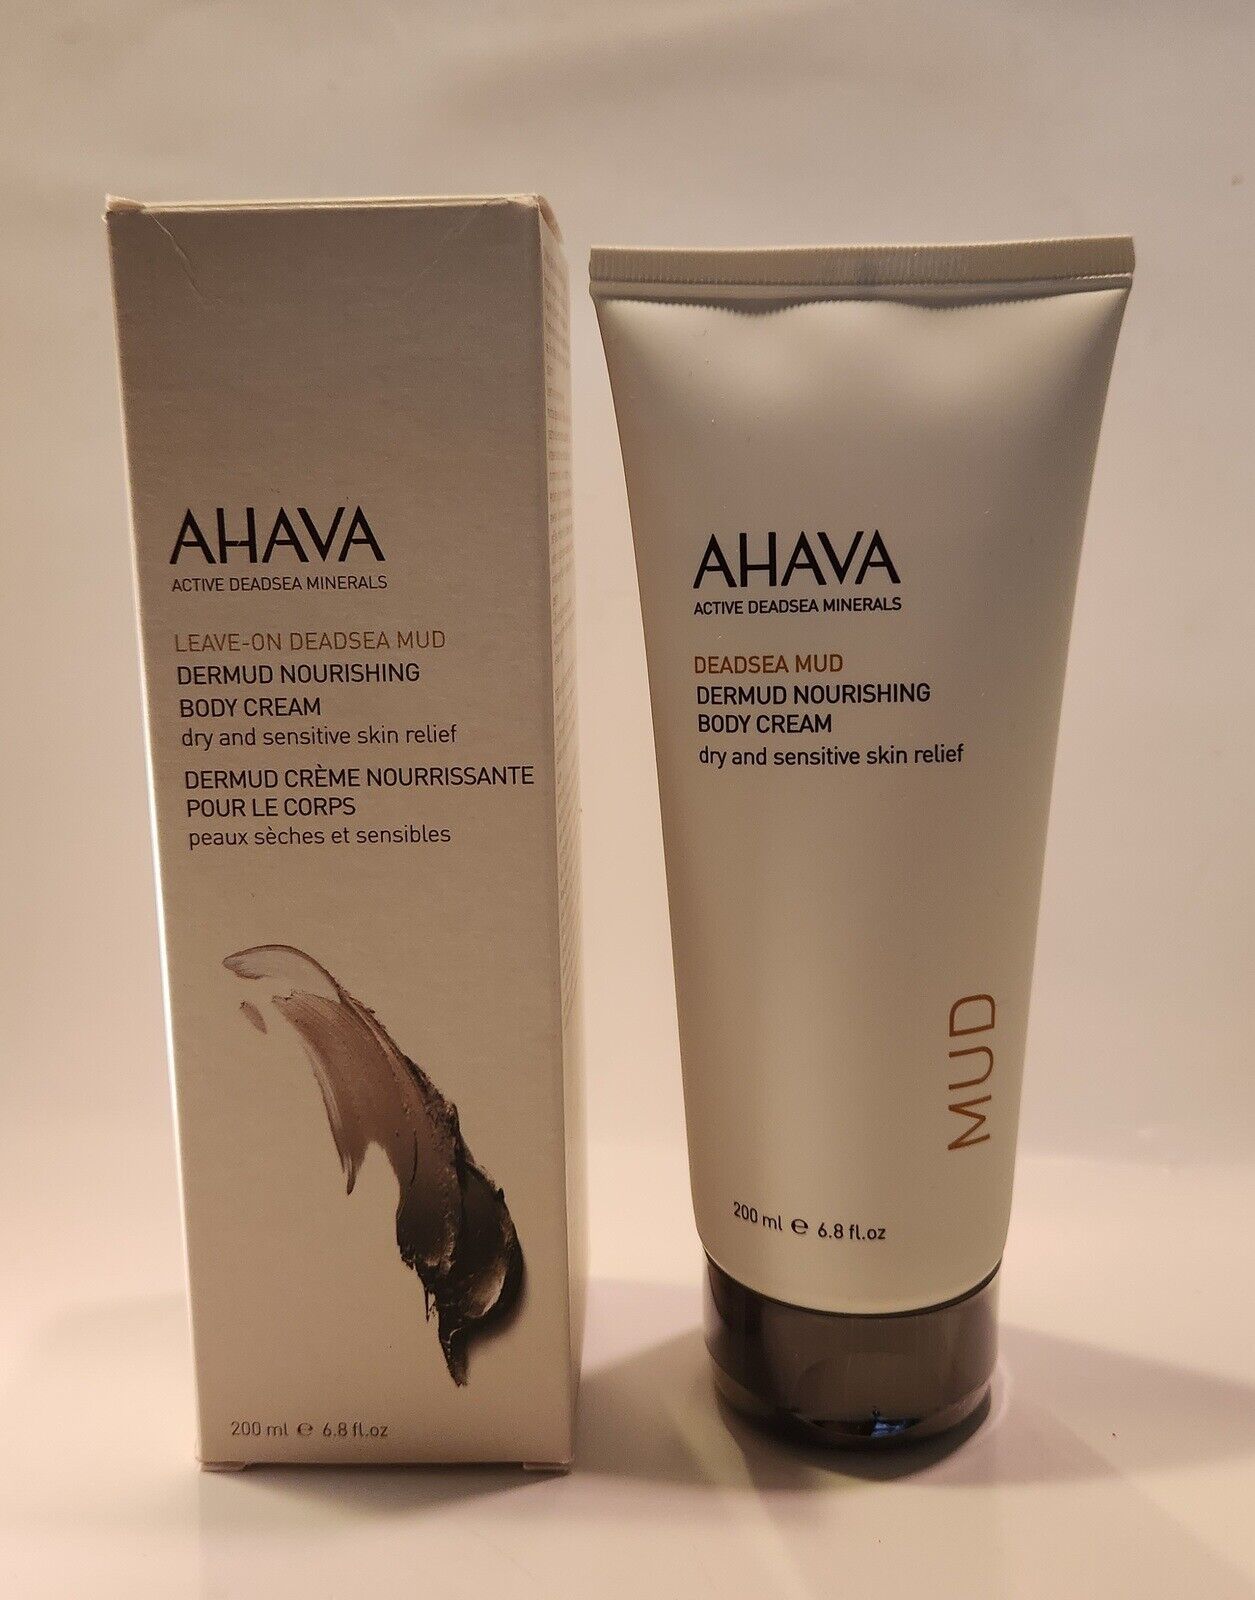 Primary image for Ahava Leave-On Deadsea Mud Dermud Nourishing Body Cream